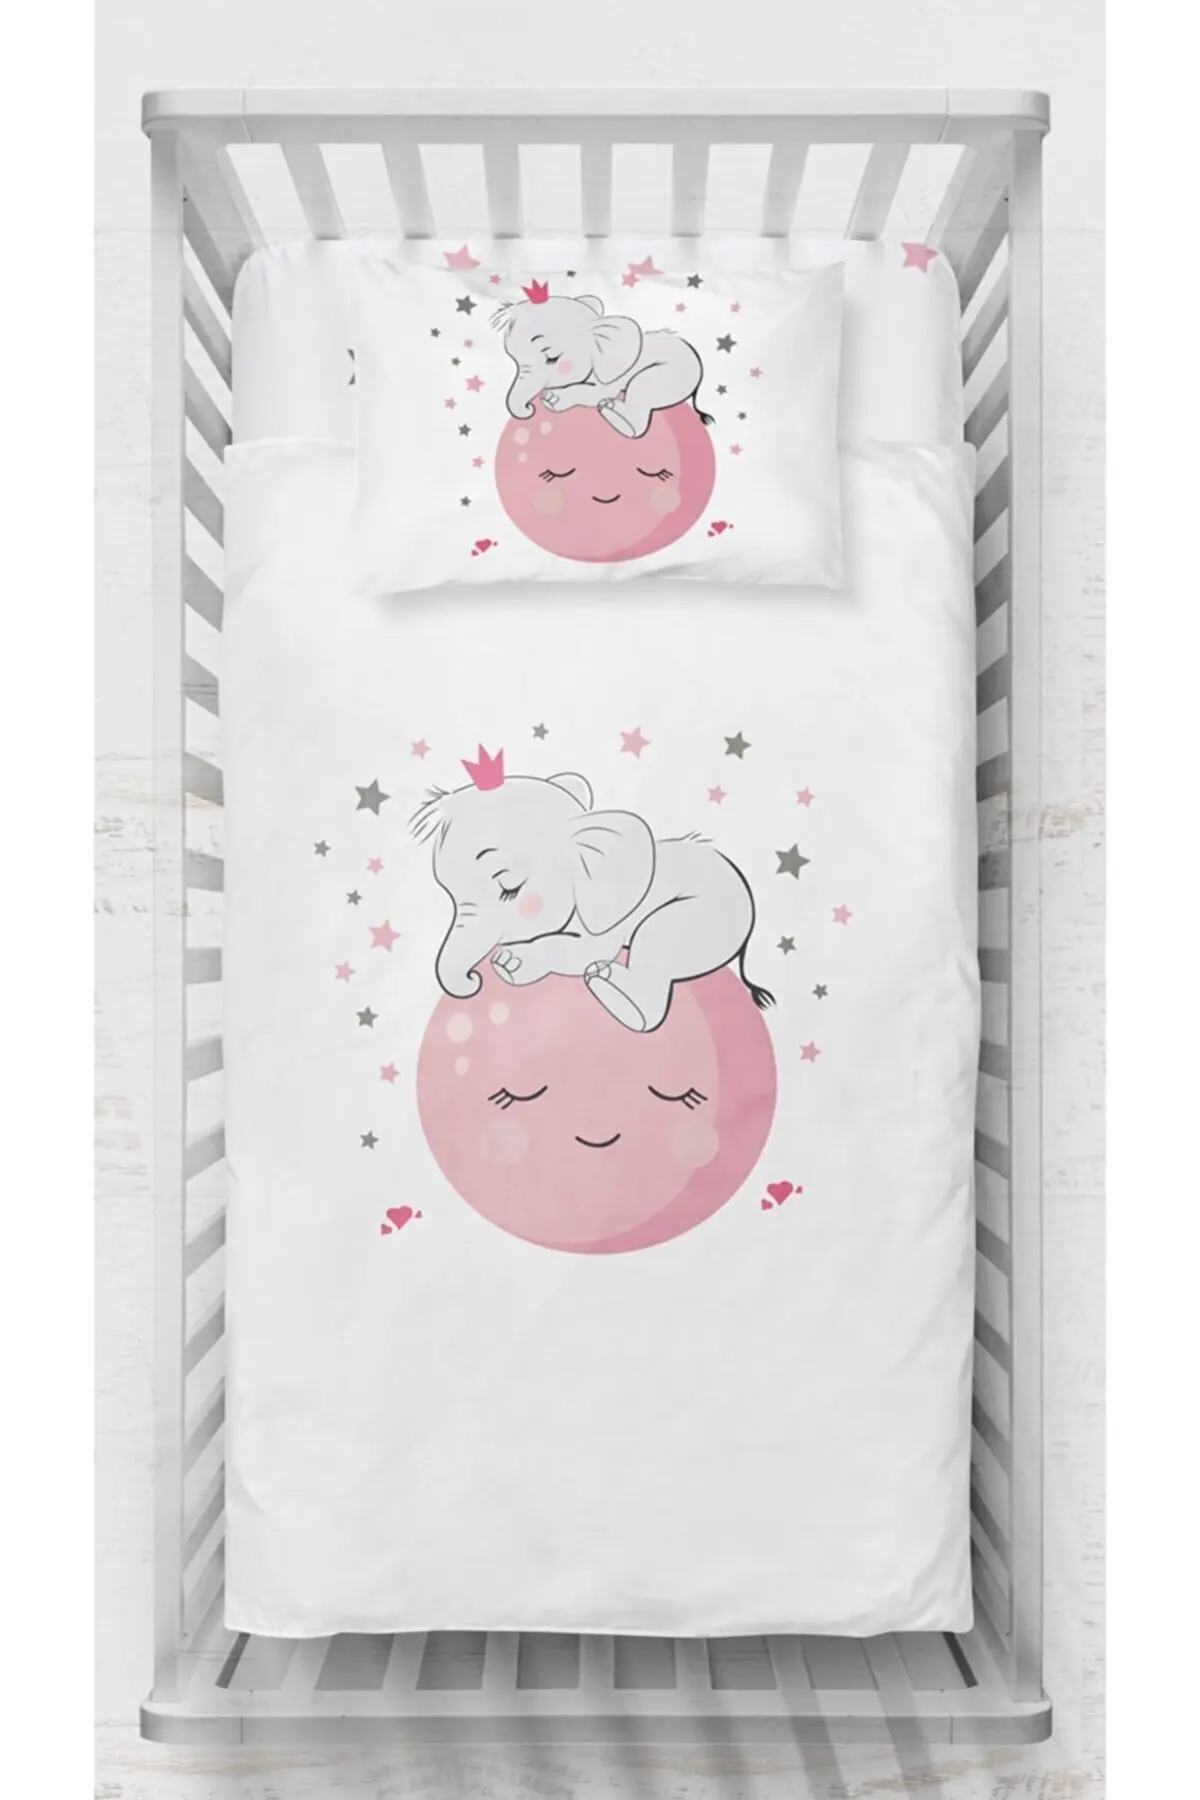 3 Pcs/Set Satin Baby Bedding Set Cartoon Animal Print Baby Crib Bed For Newborns Infant Bedding Set 100% Soft Comfortable Design